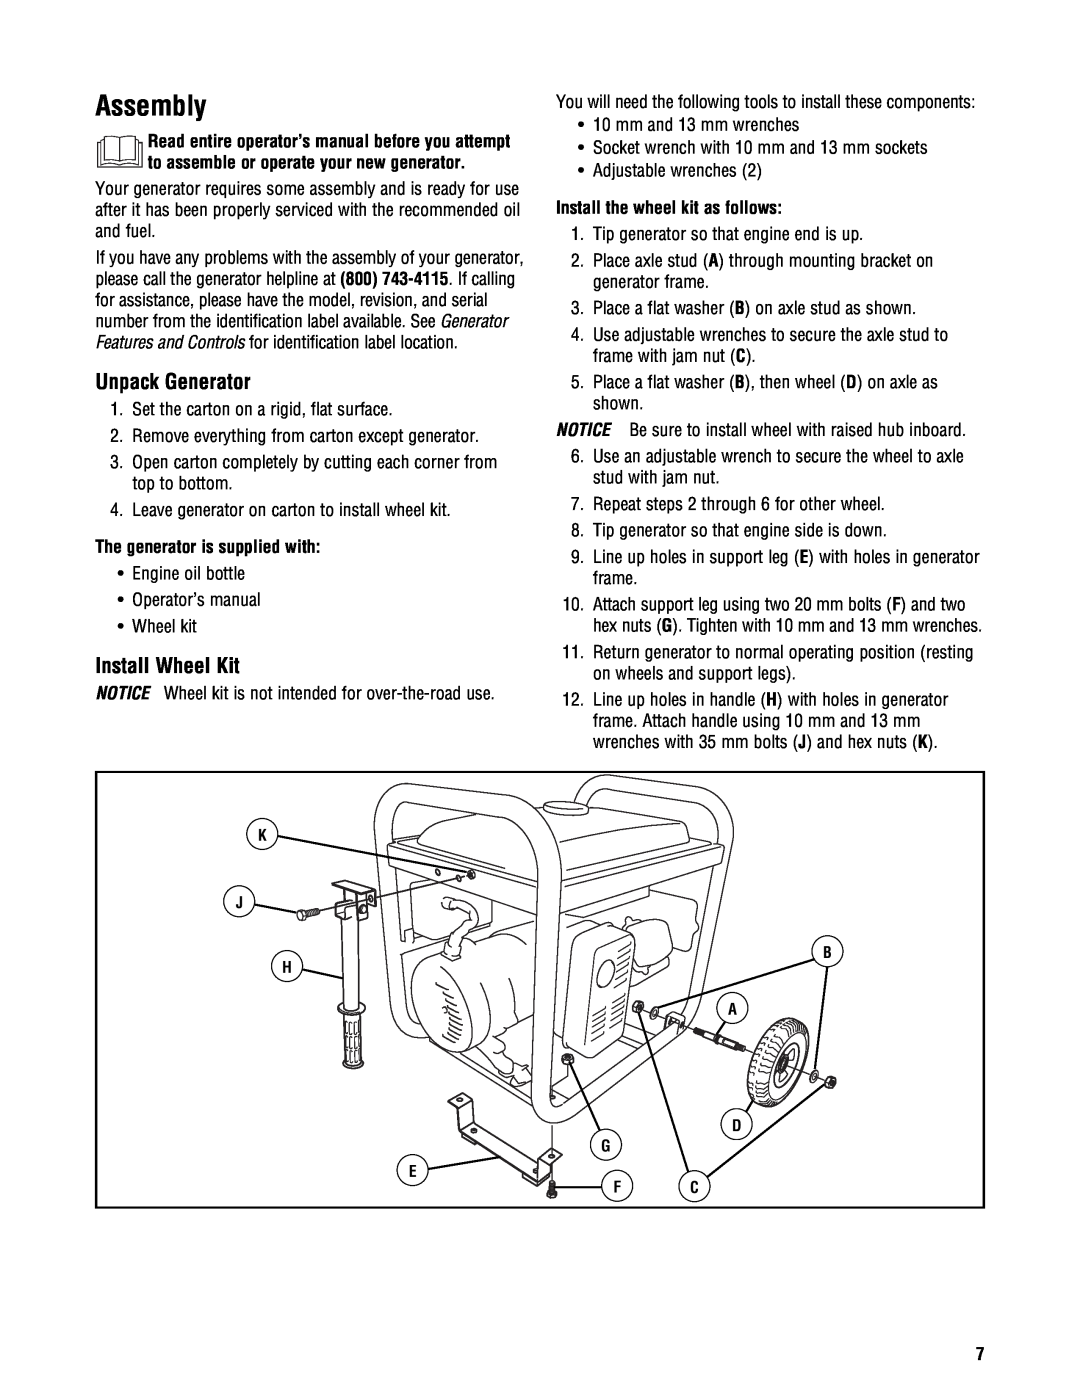 Briggs & Stratton 209443gs manual Assembly, Unpack Generator, Install Wheel Kit, Install the wheel kit as follows 